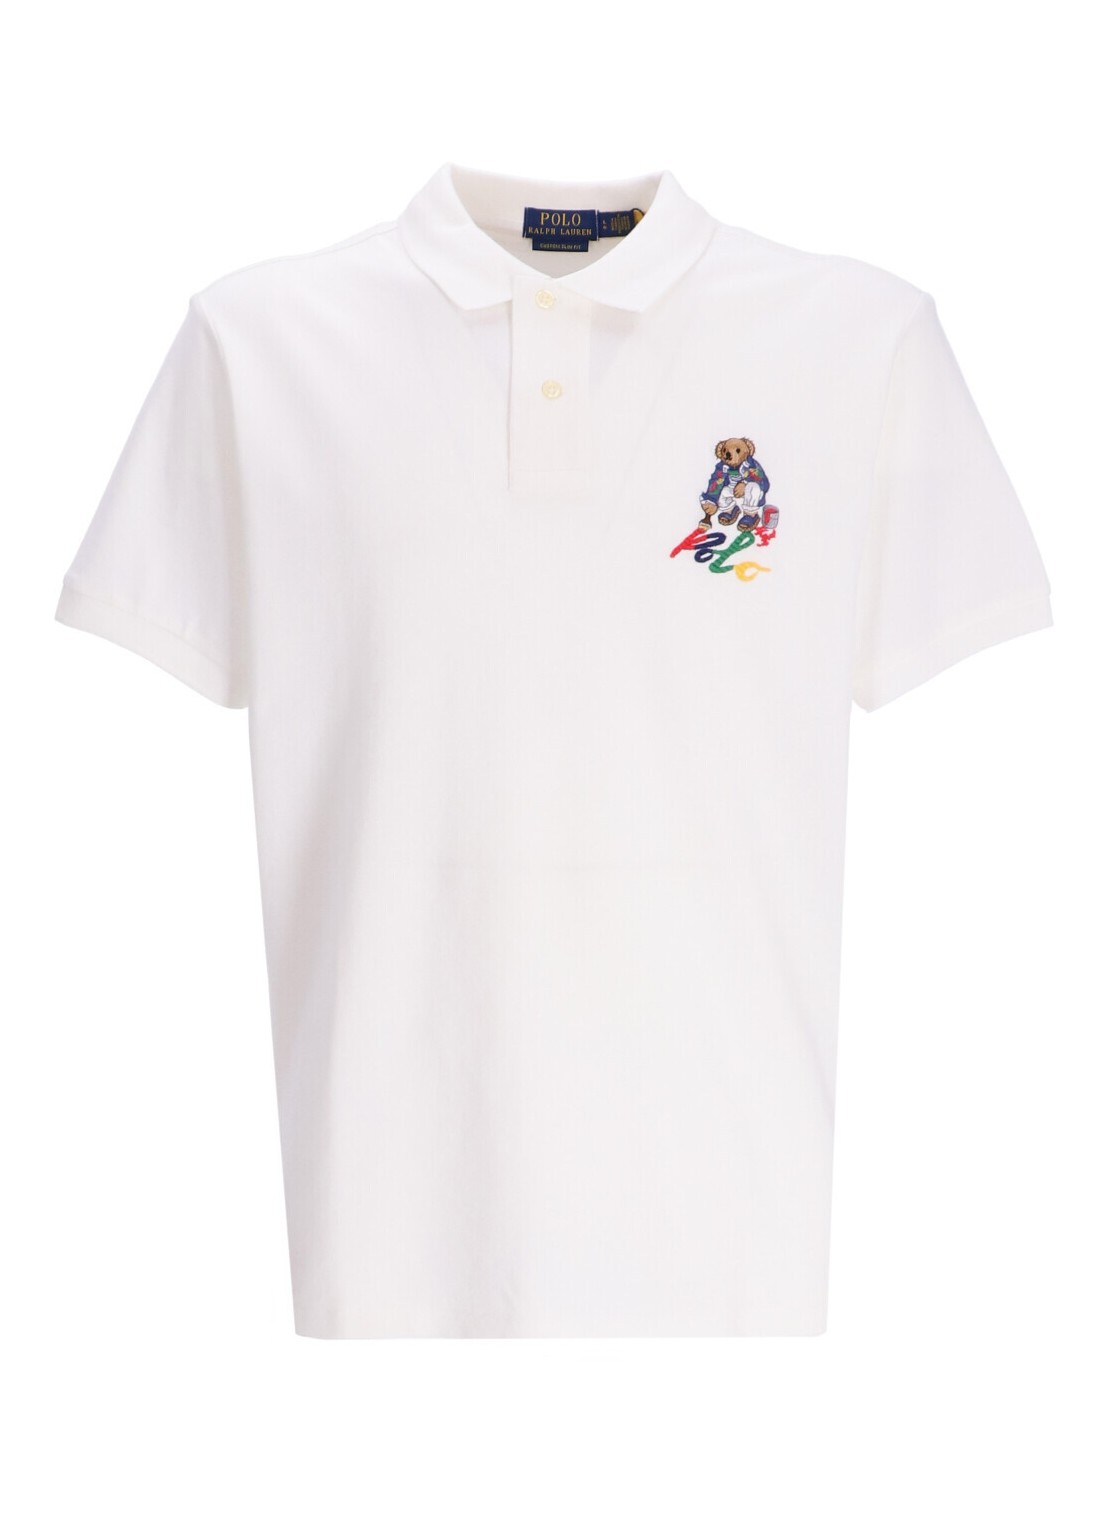 Polo polo ralph lauren polo man sskccmslm1-short sleeve-polo shirt 710853312023 cr23 white paint bea